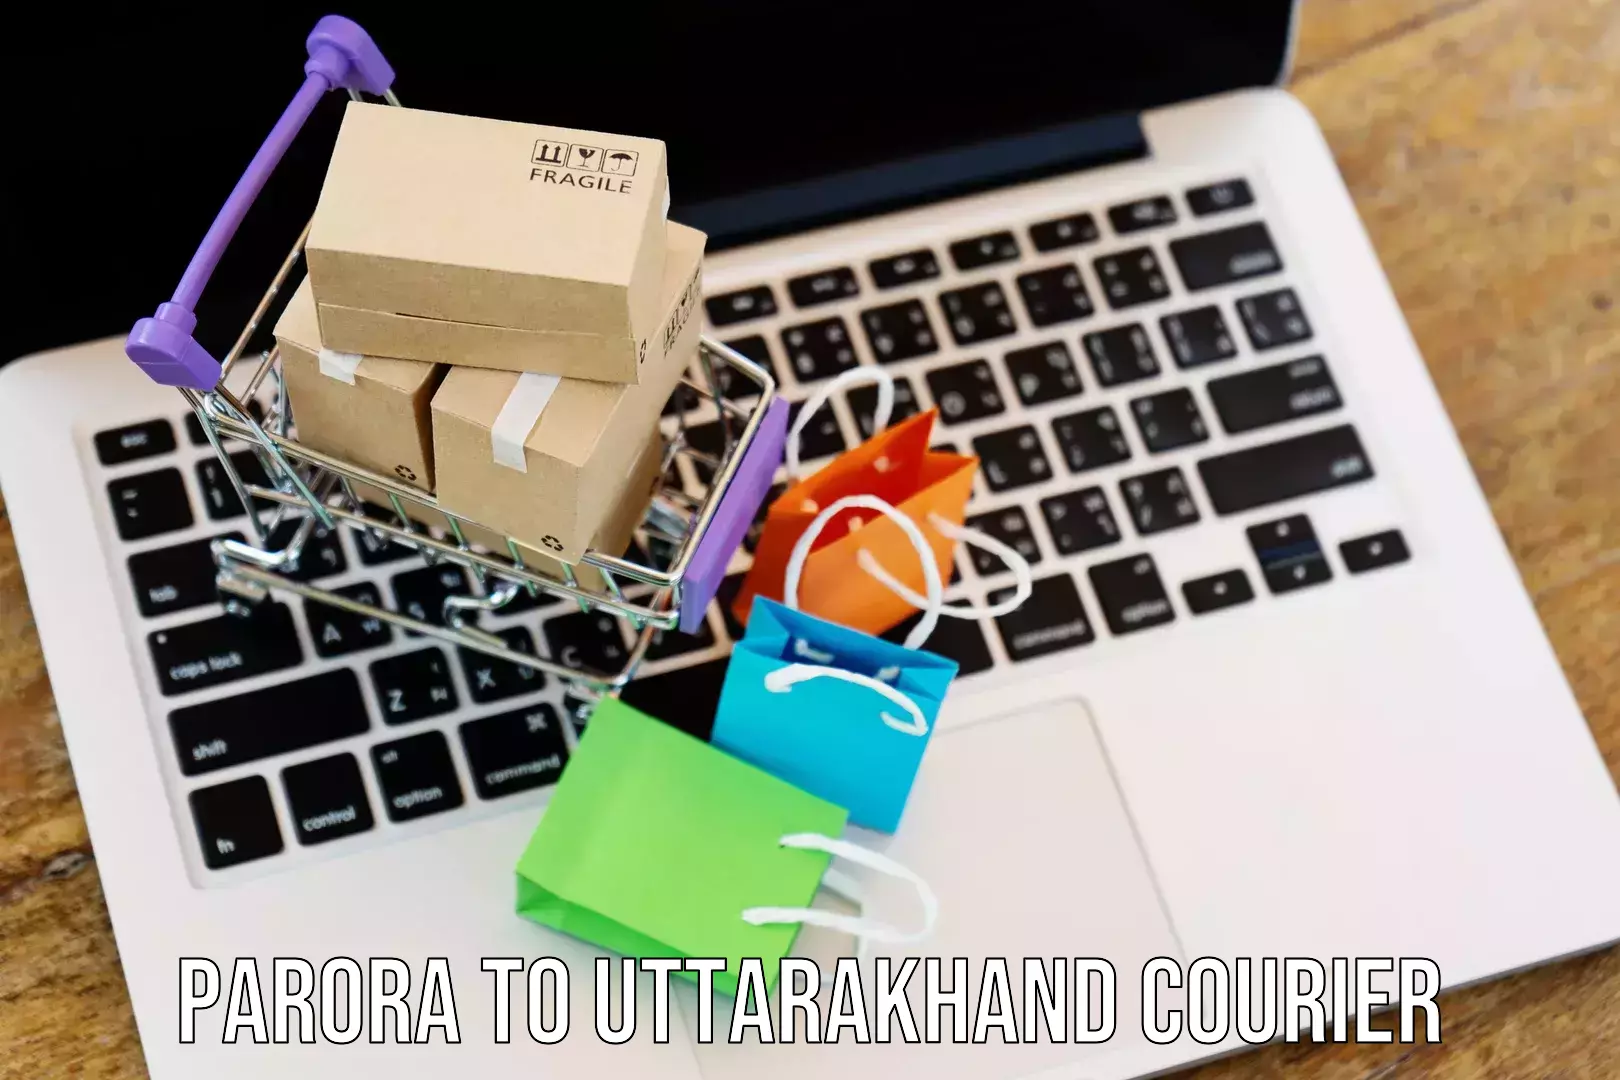 State-of-the-art courier technology Parora to Uttarakhand